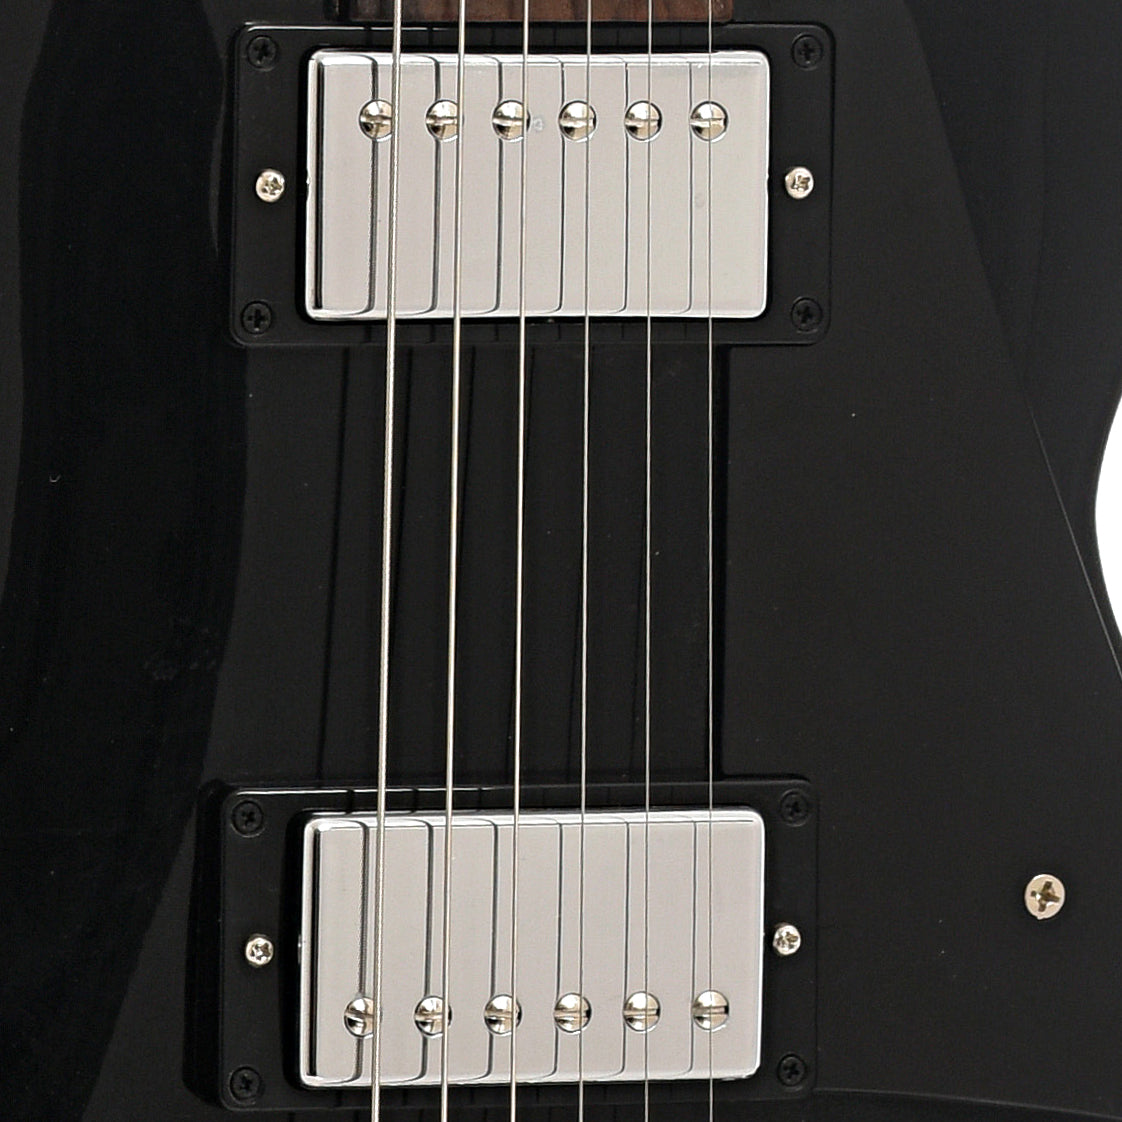 Pickups of Gibson Les Paul Studio